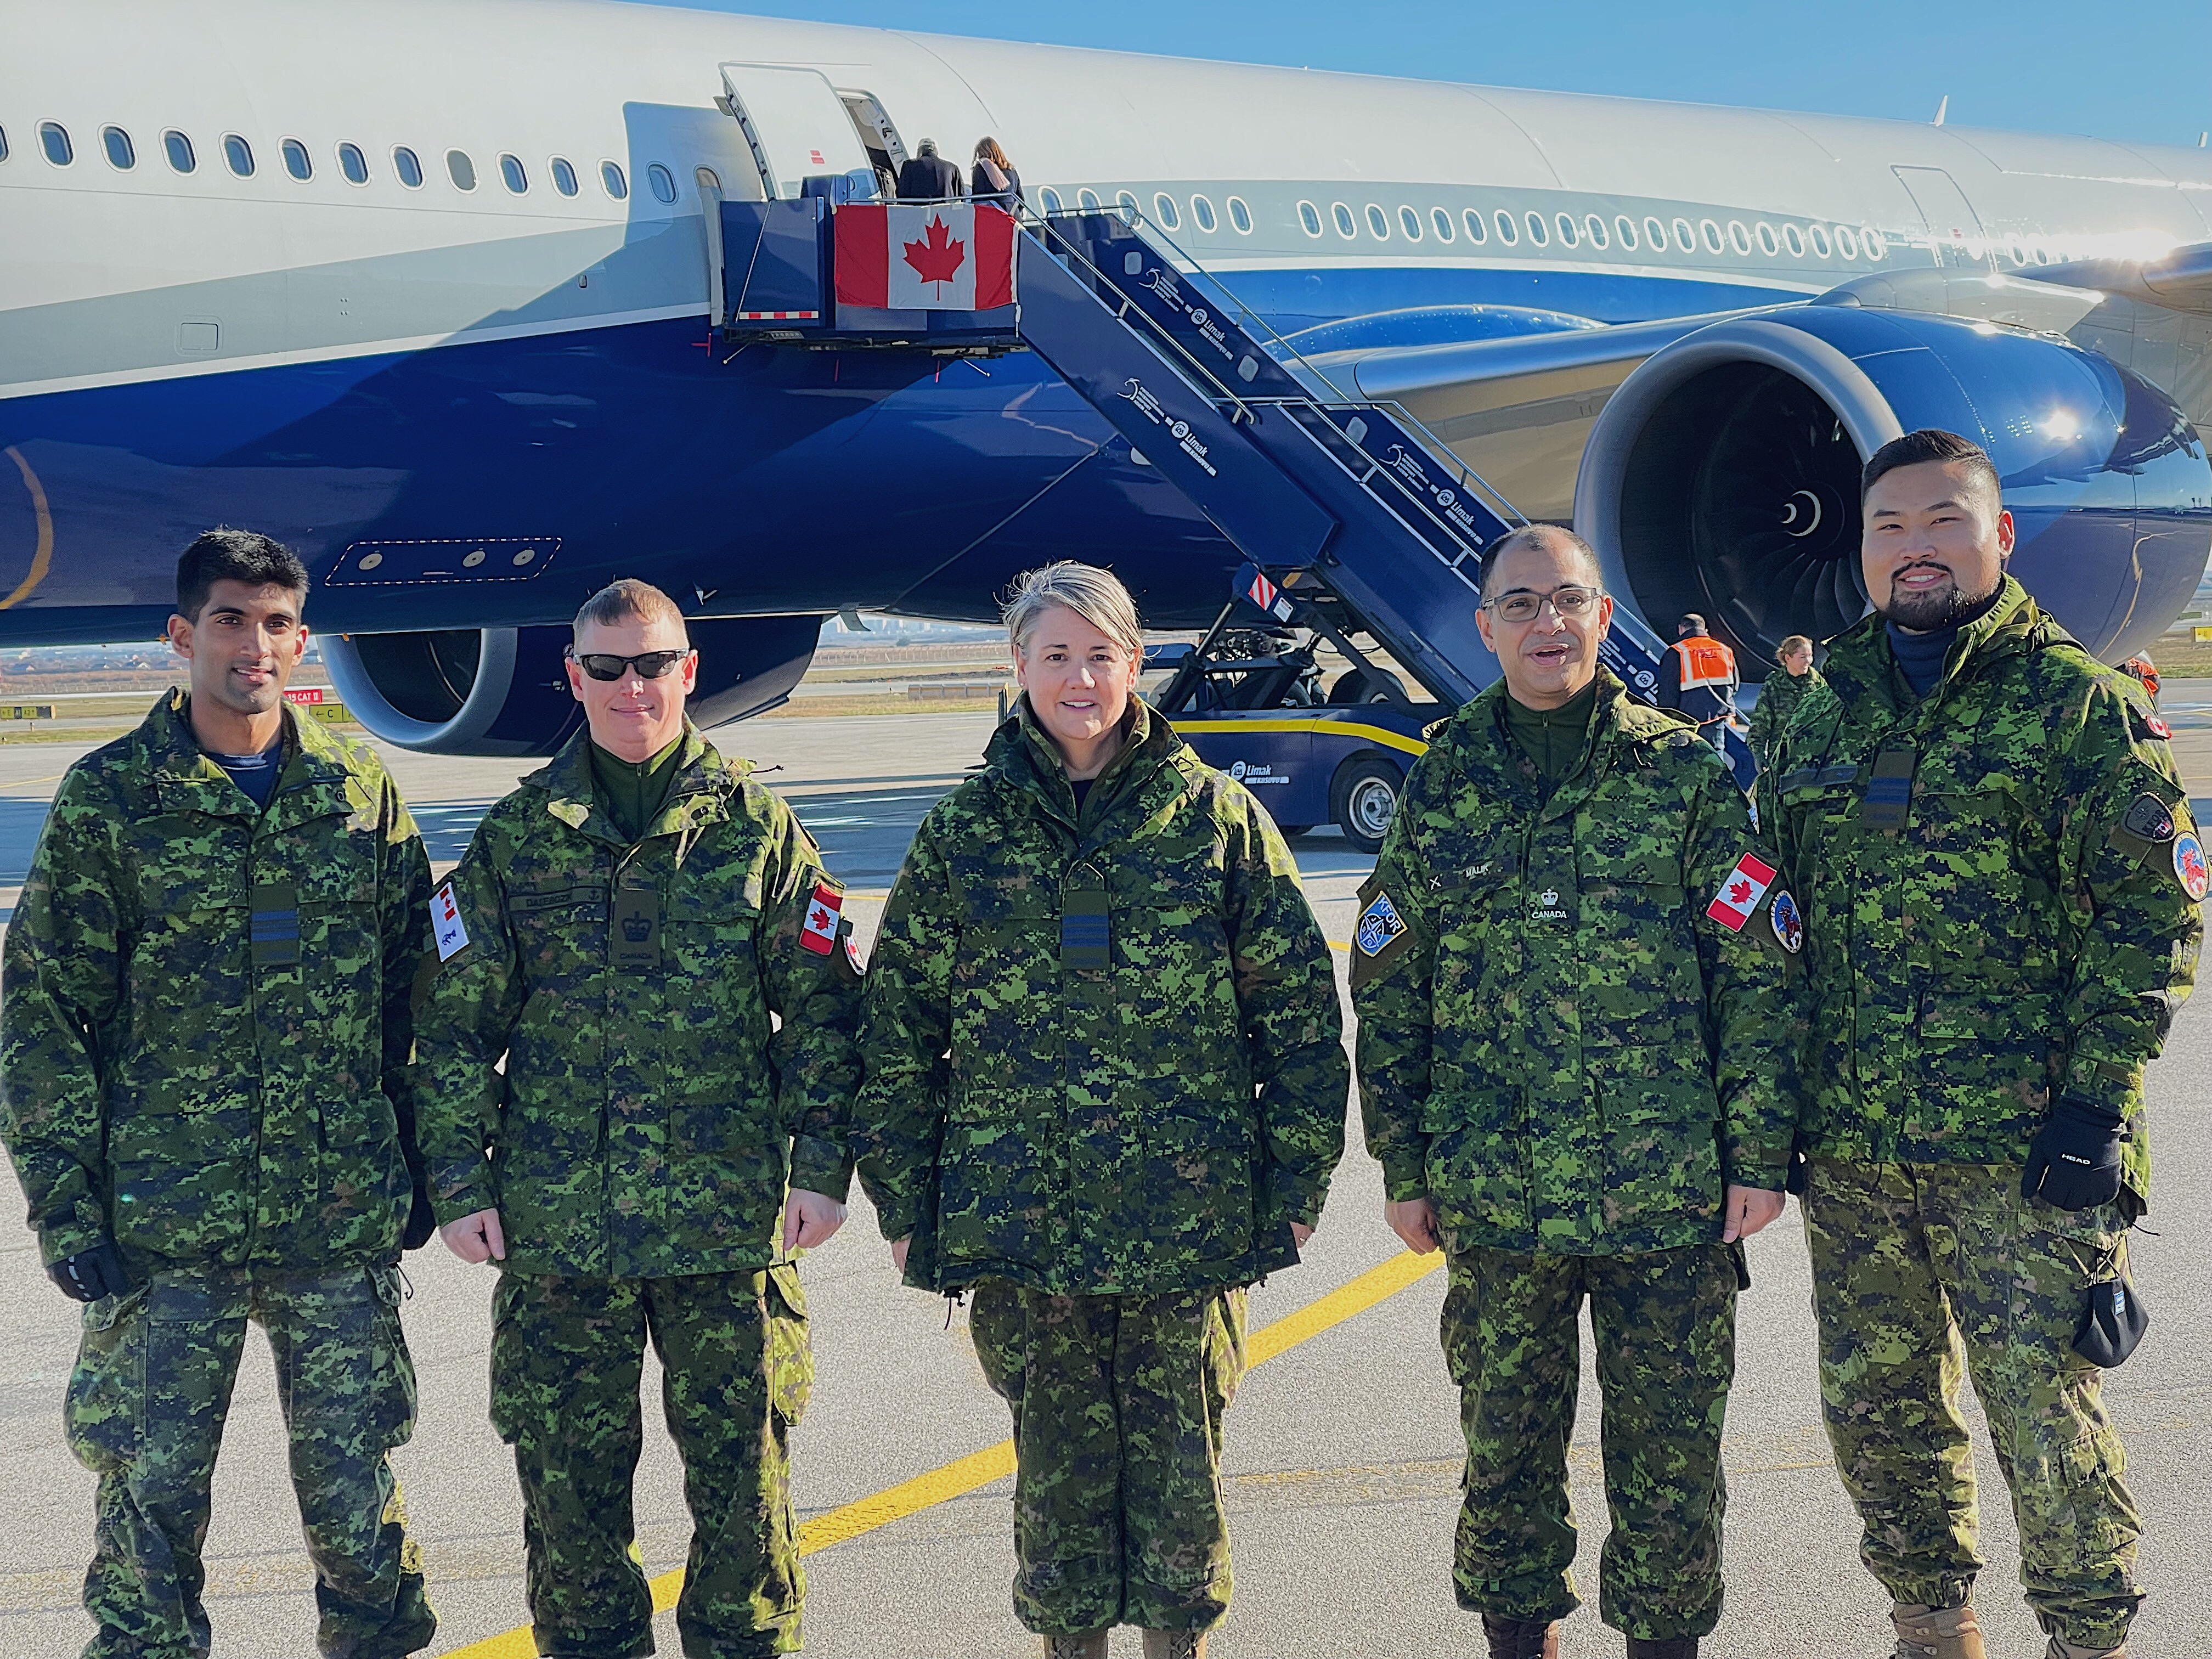 Five members of Roto 25 escort departing dignitaries at Pristina International Airport, Kosovo, on December 8, 2021.